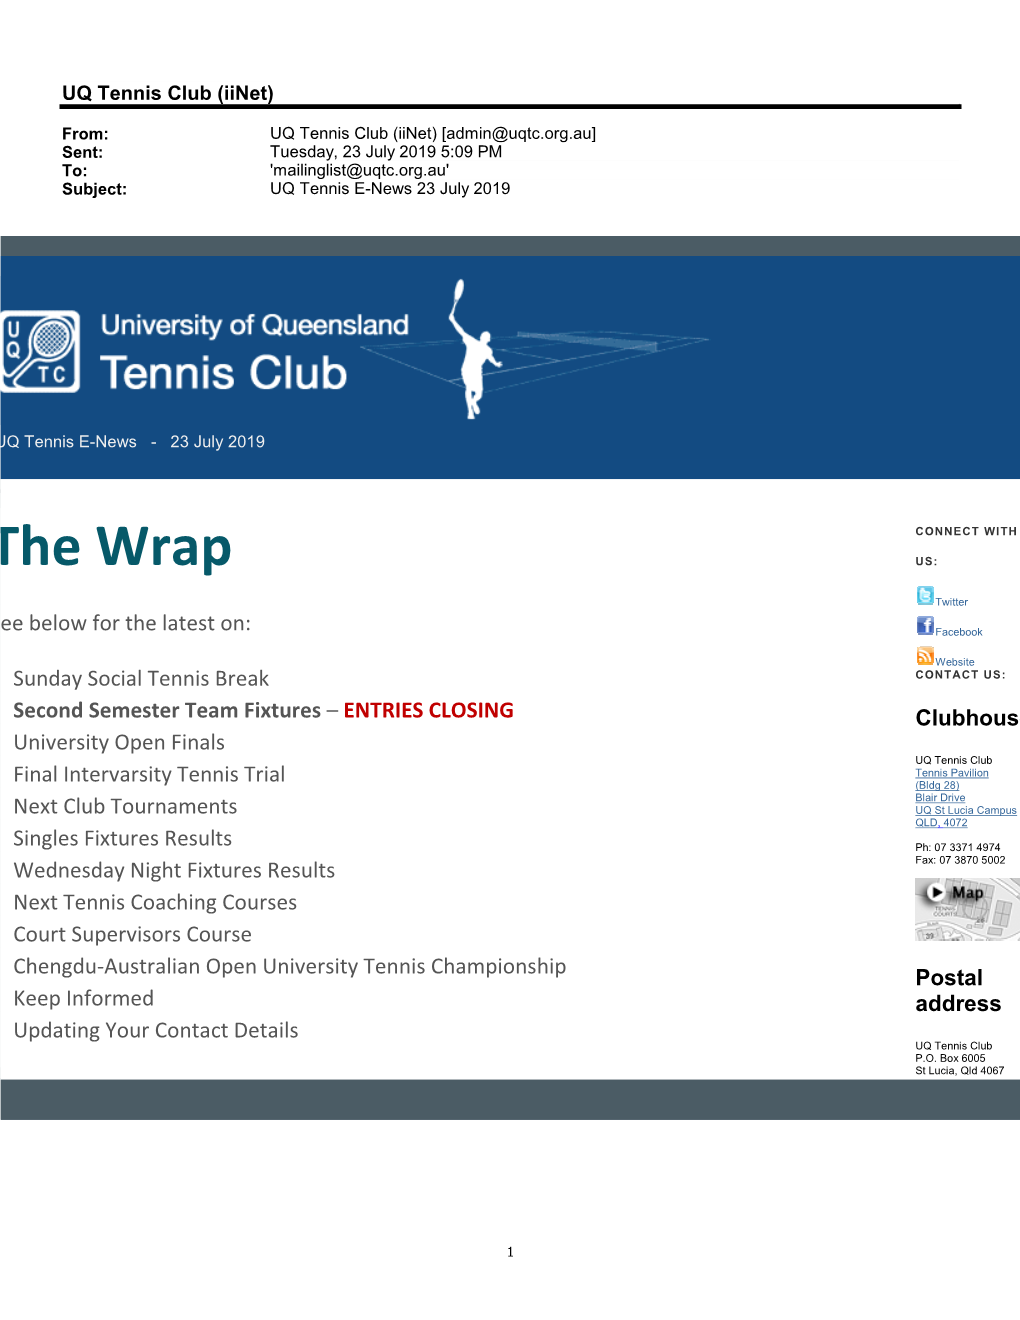 Next Tennis Coaching Courses